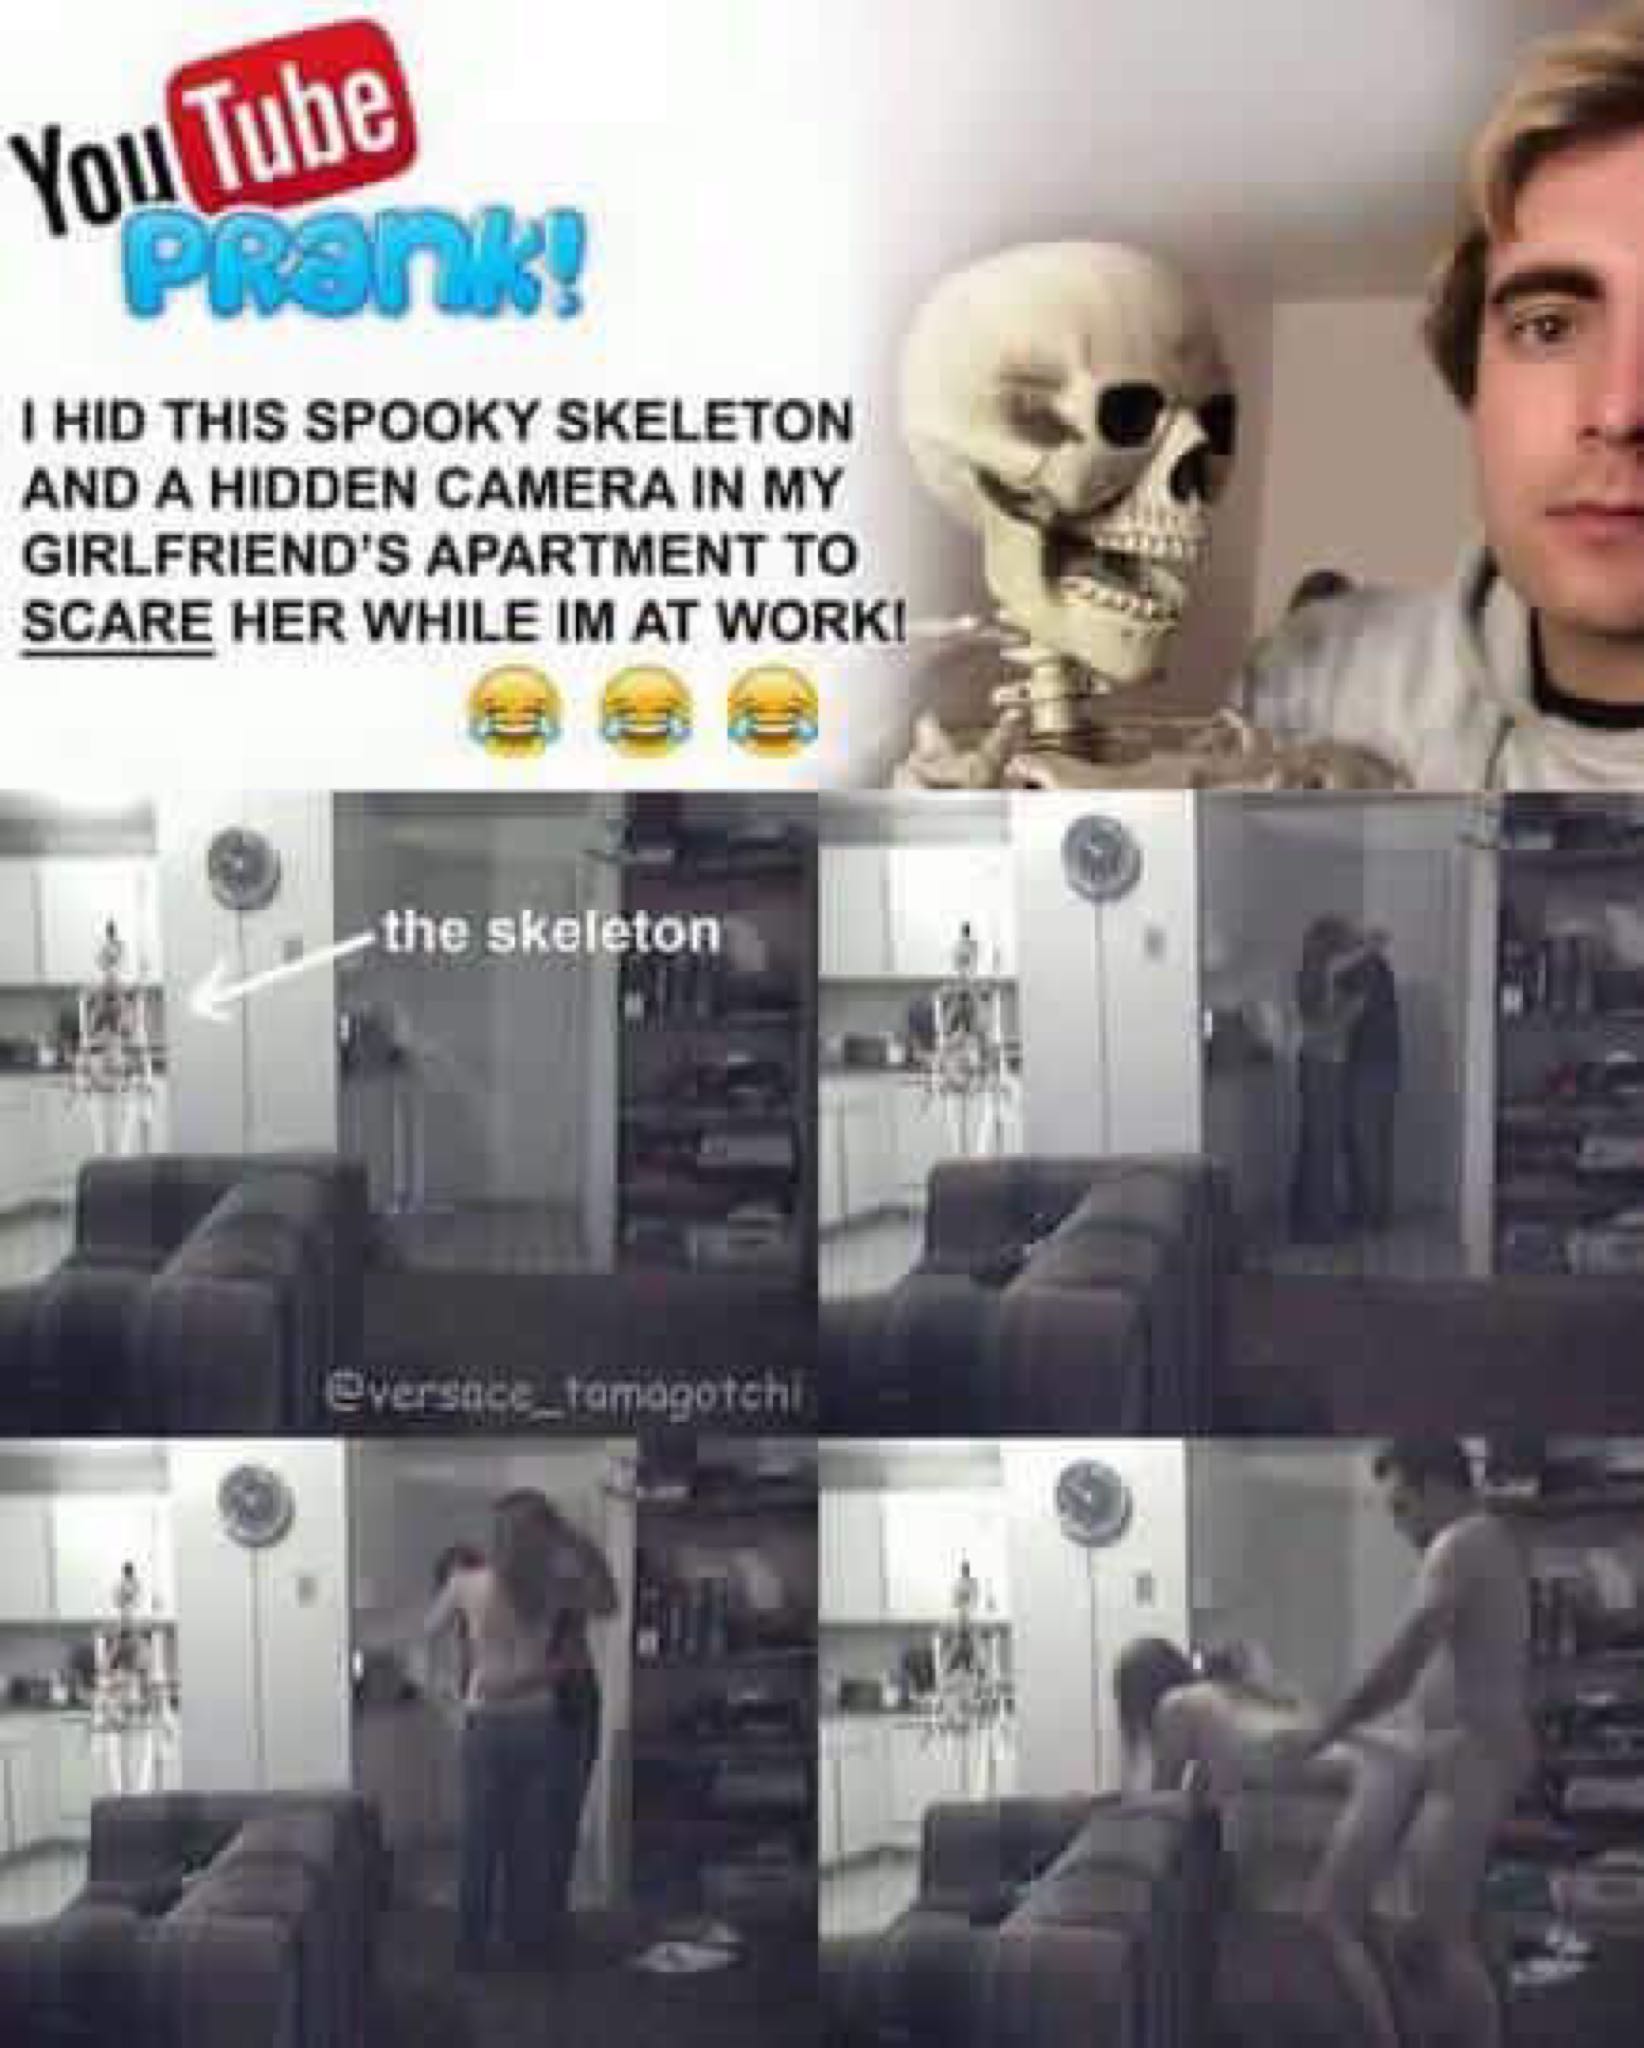 youtube prank with a spooky skeleton - failed.